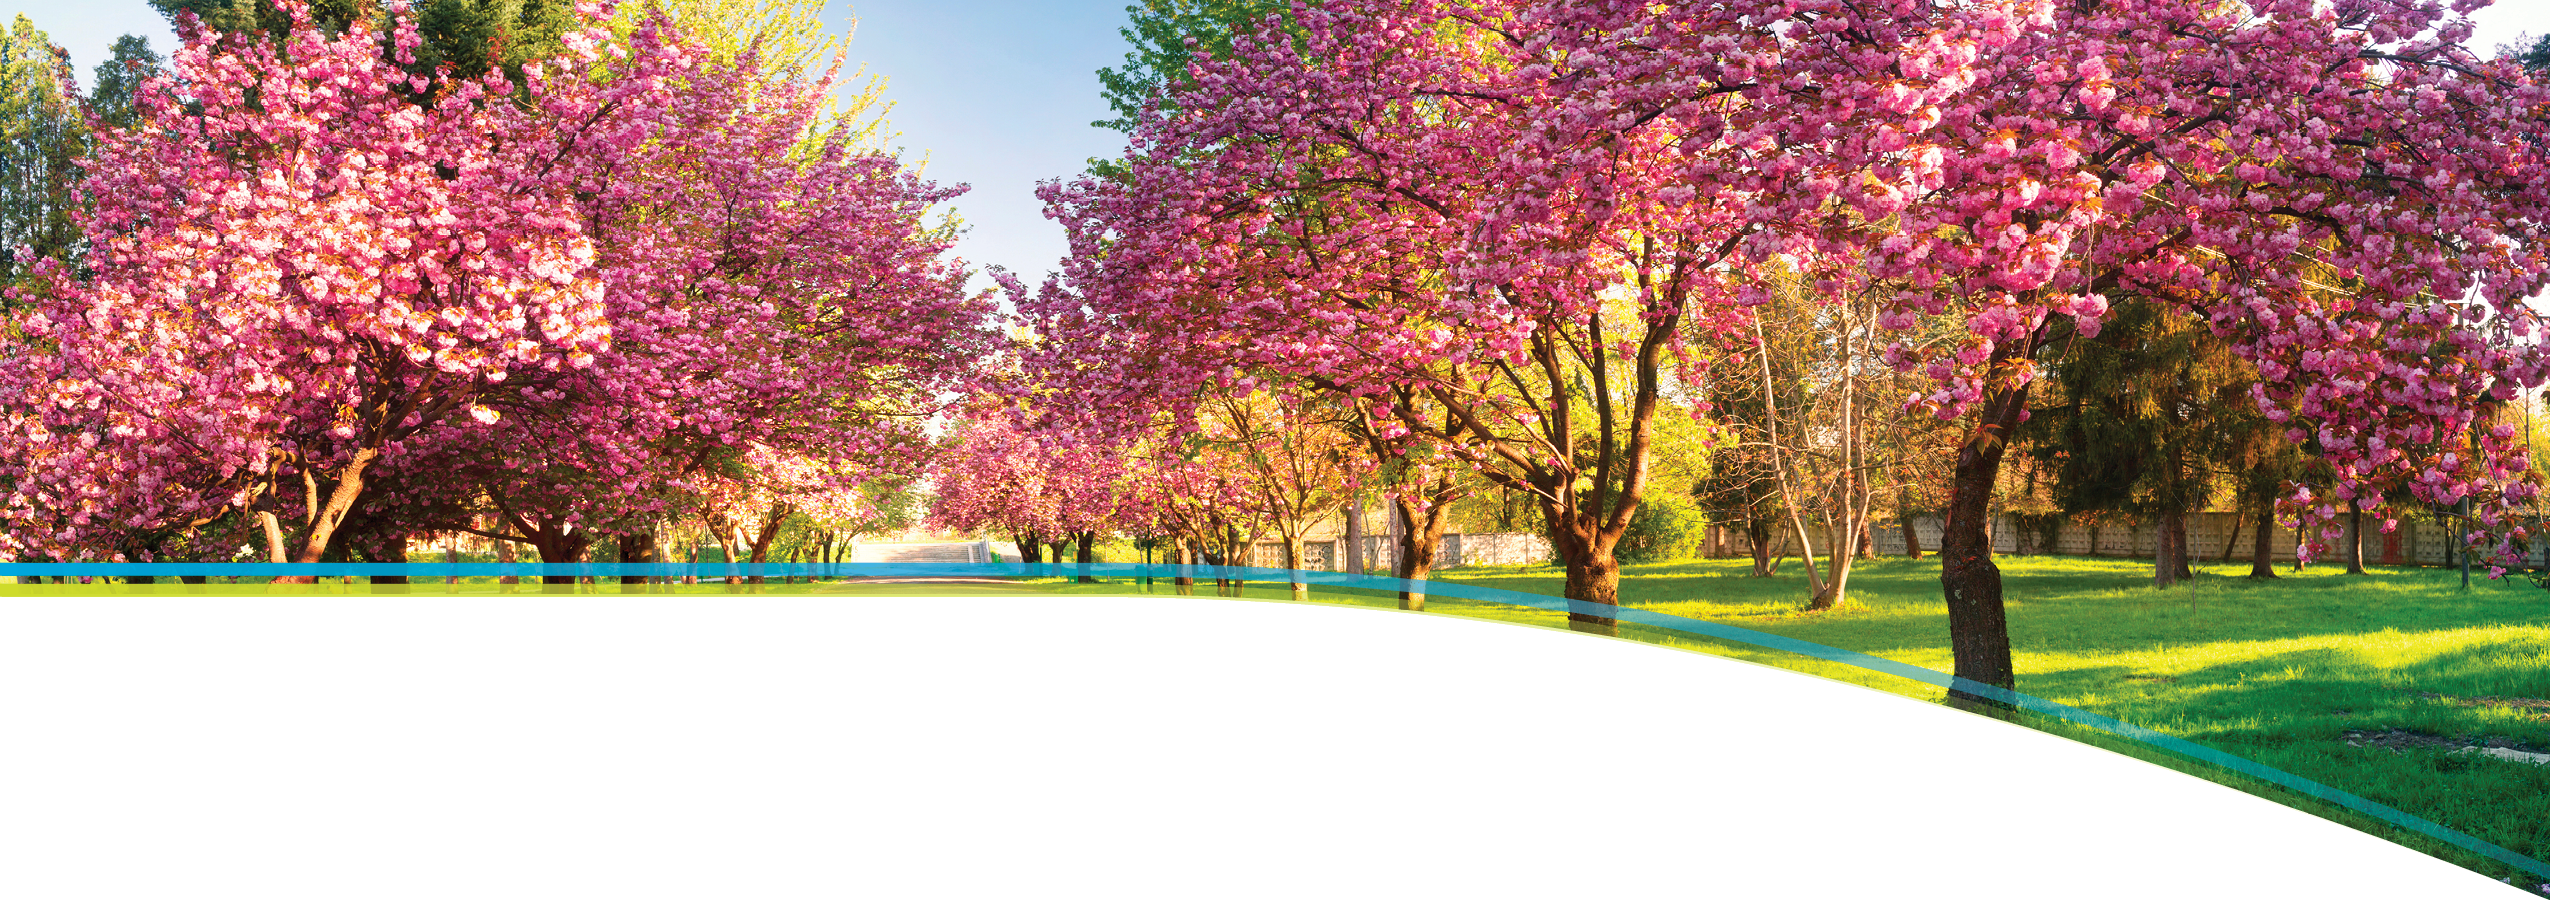 Cherry blossom trees image